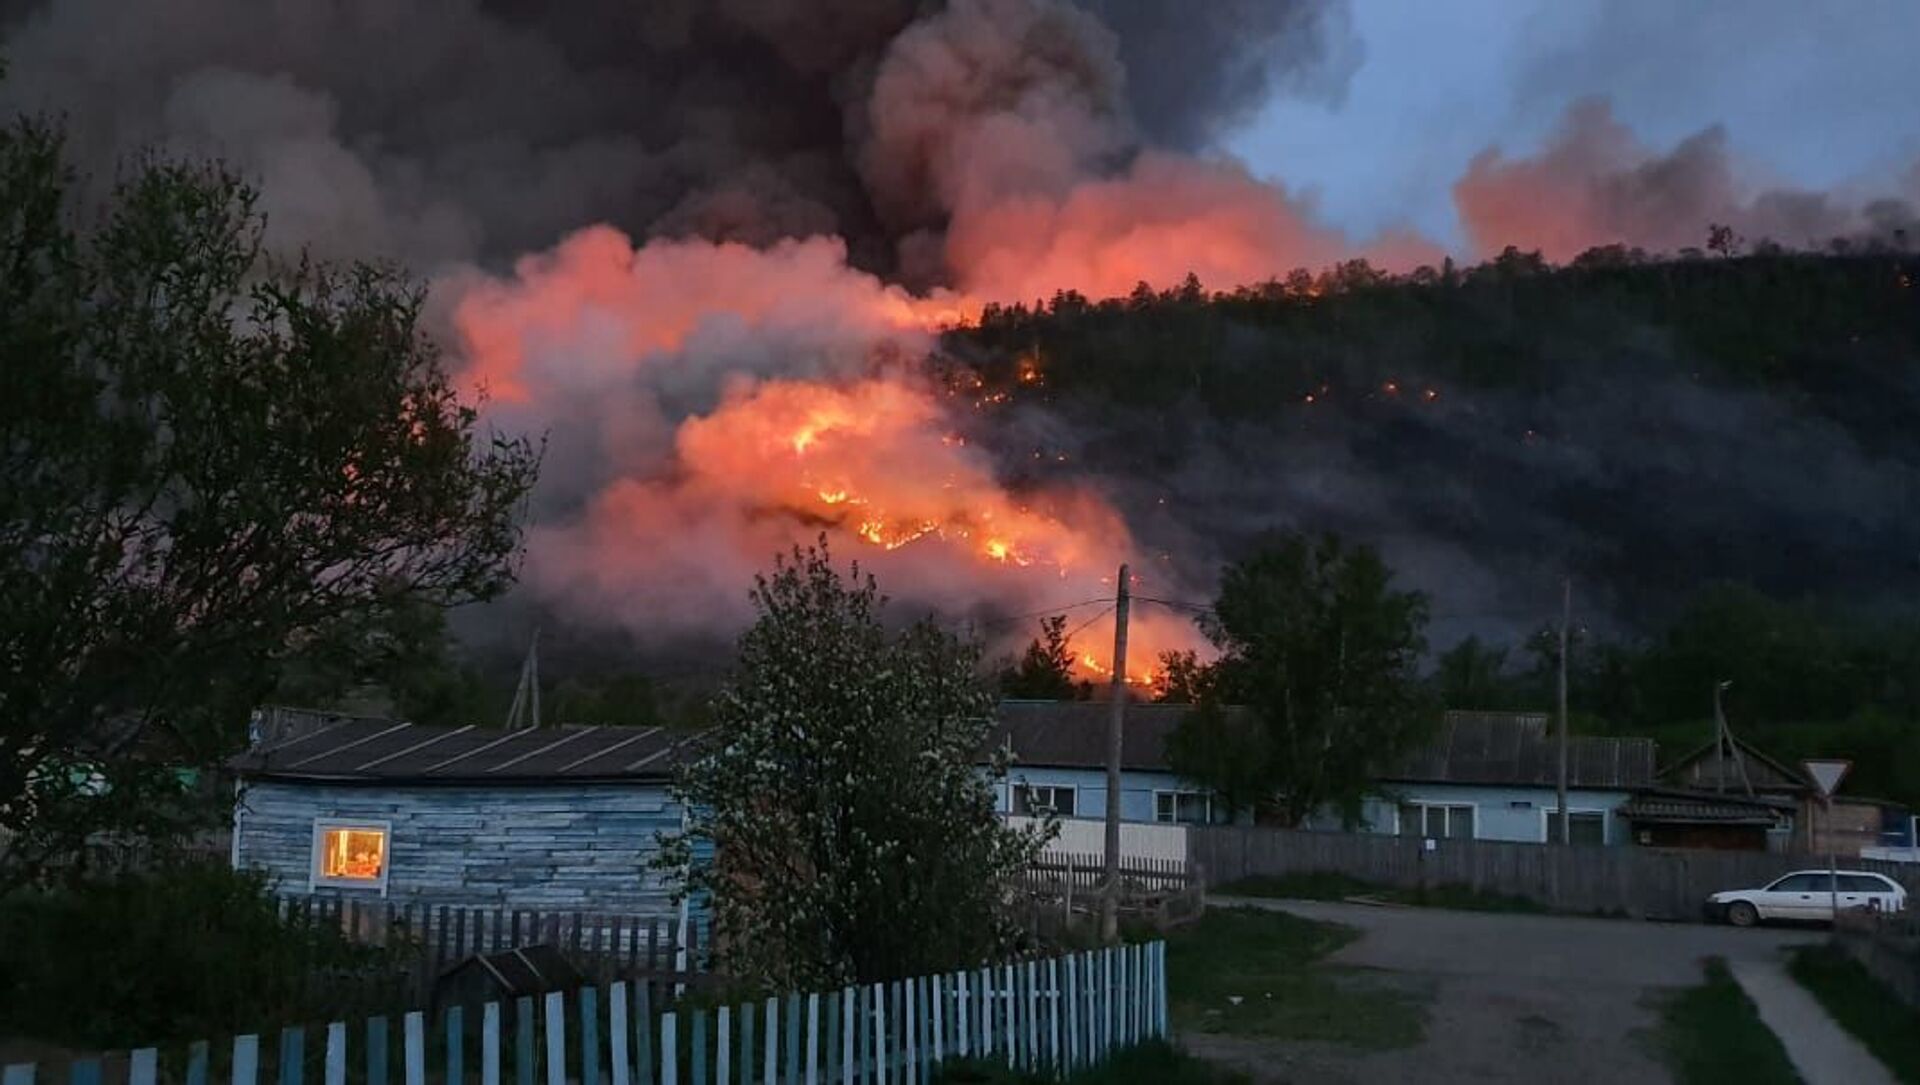 حرائق في غابات كامتشاتكا، روسيا 18 يونيو 2020 - سبوتنيك عربي, 1920, 17.08.2021